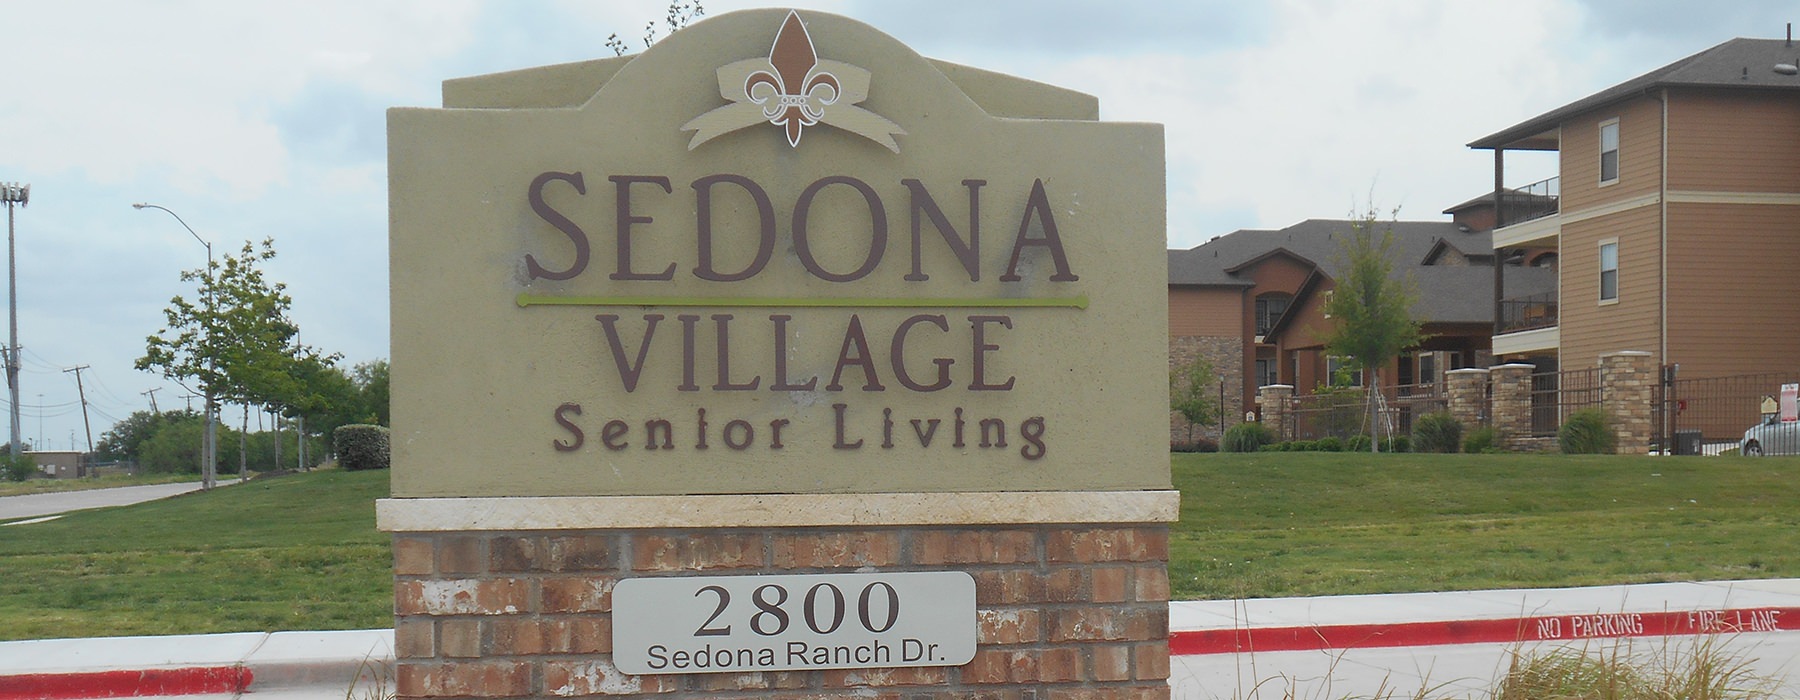 Sedona Village Senior Living sign 